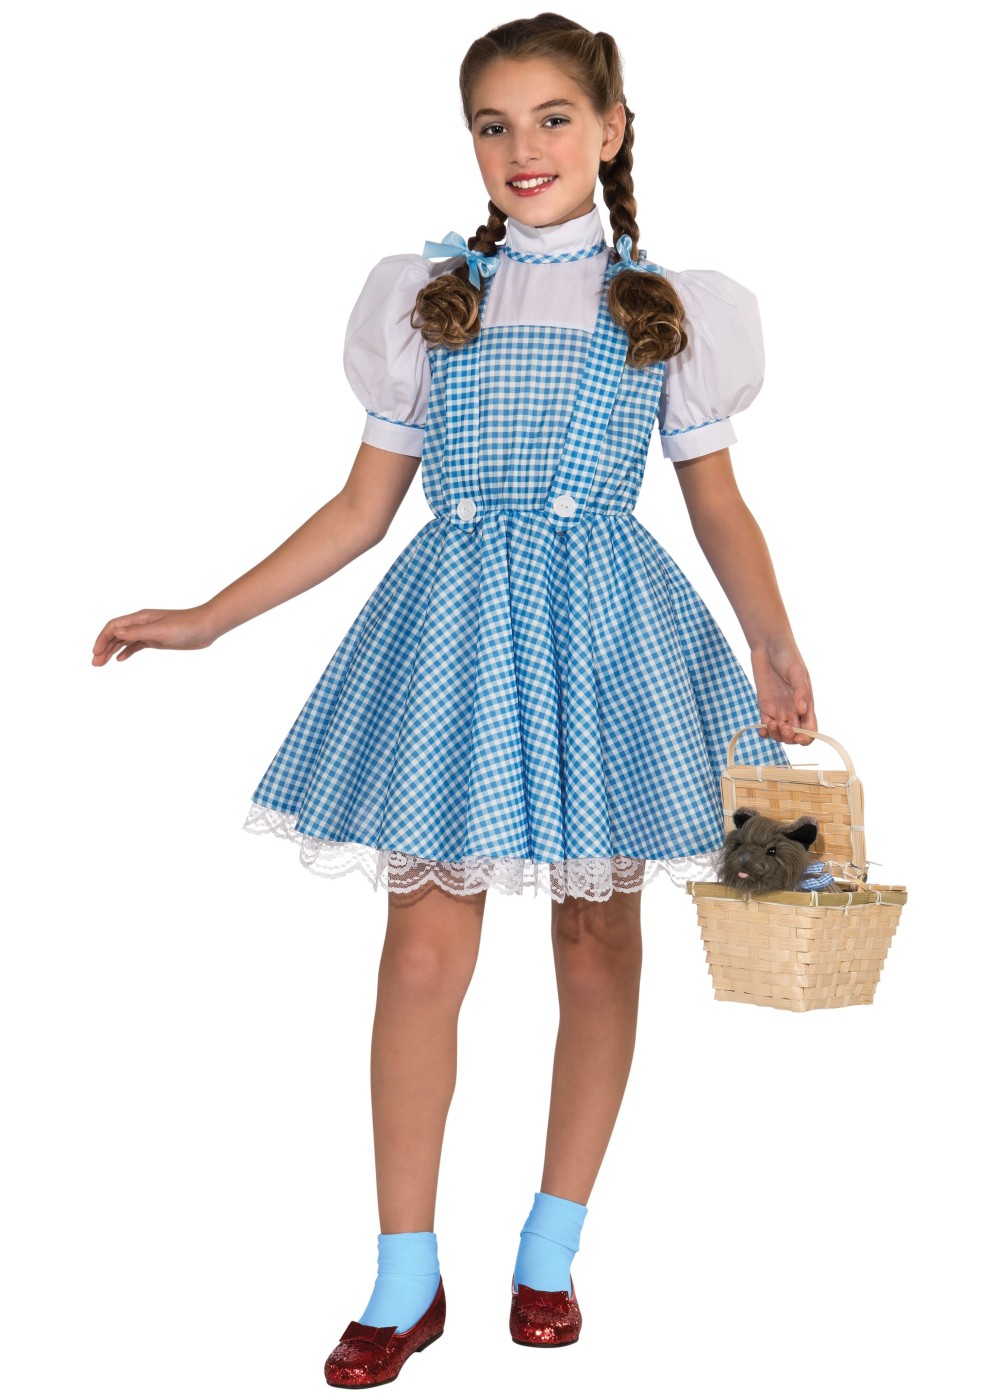  Dorothy Child Costume